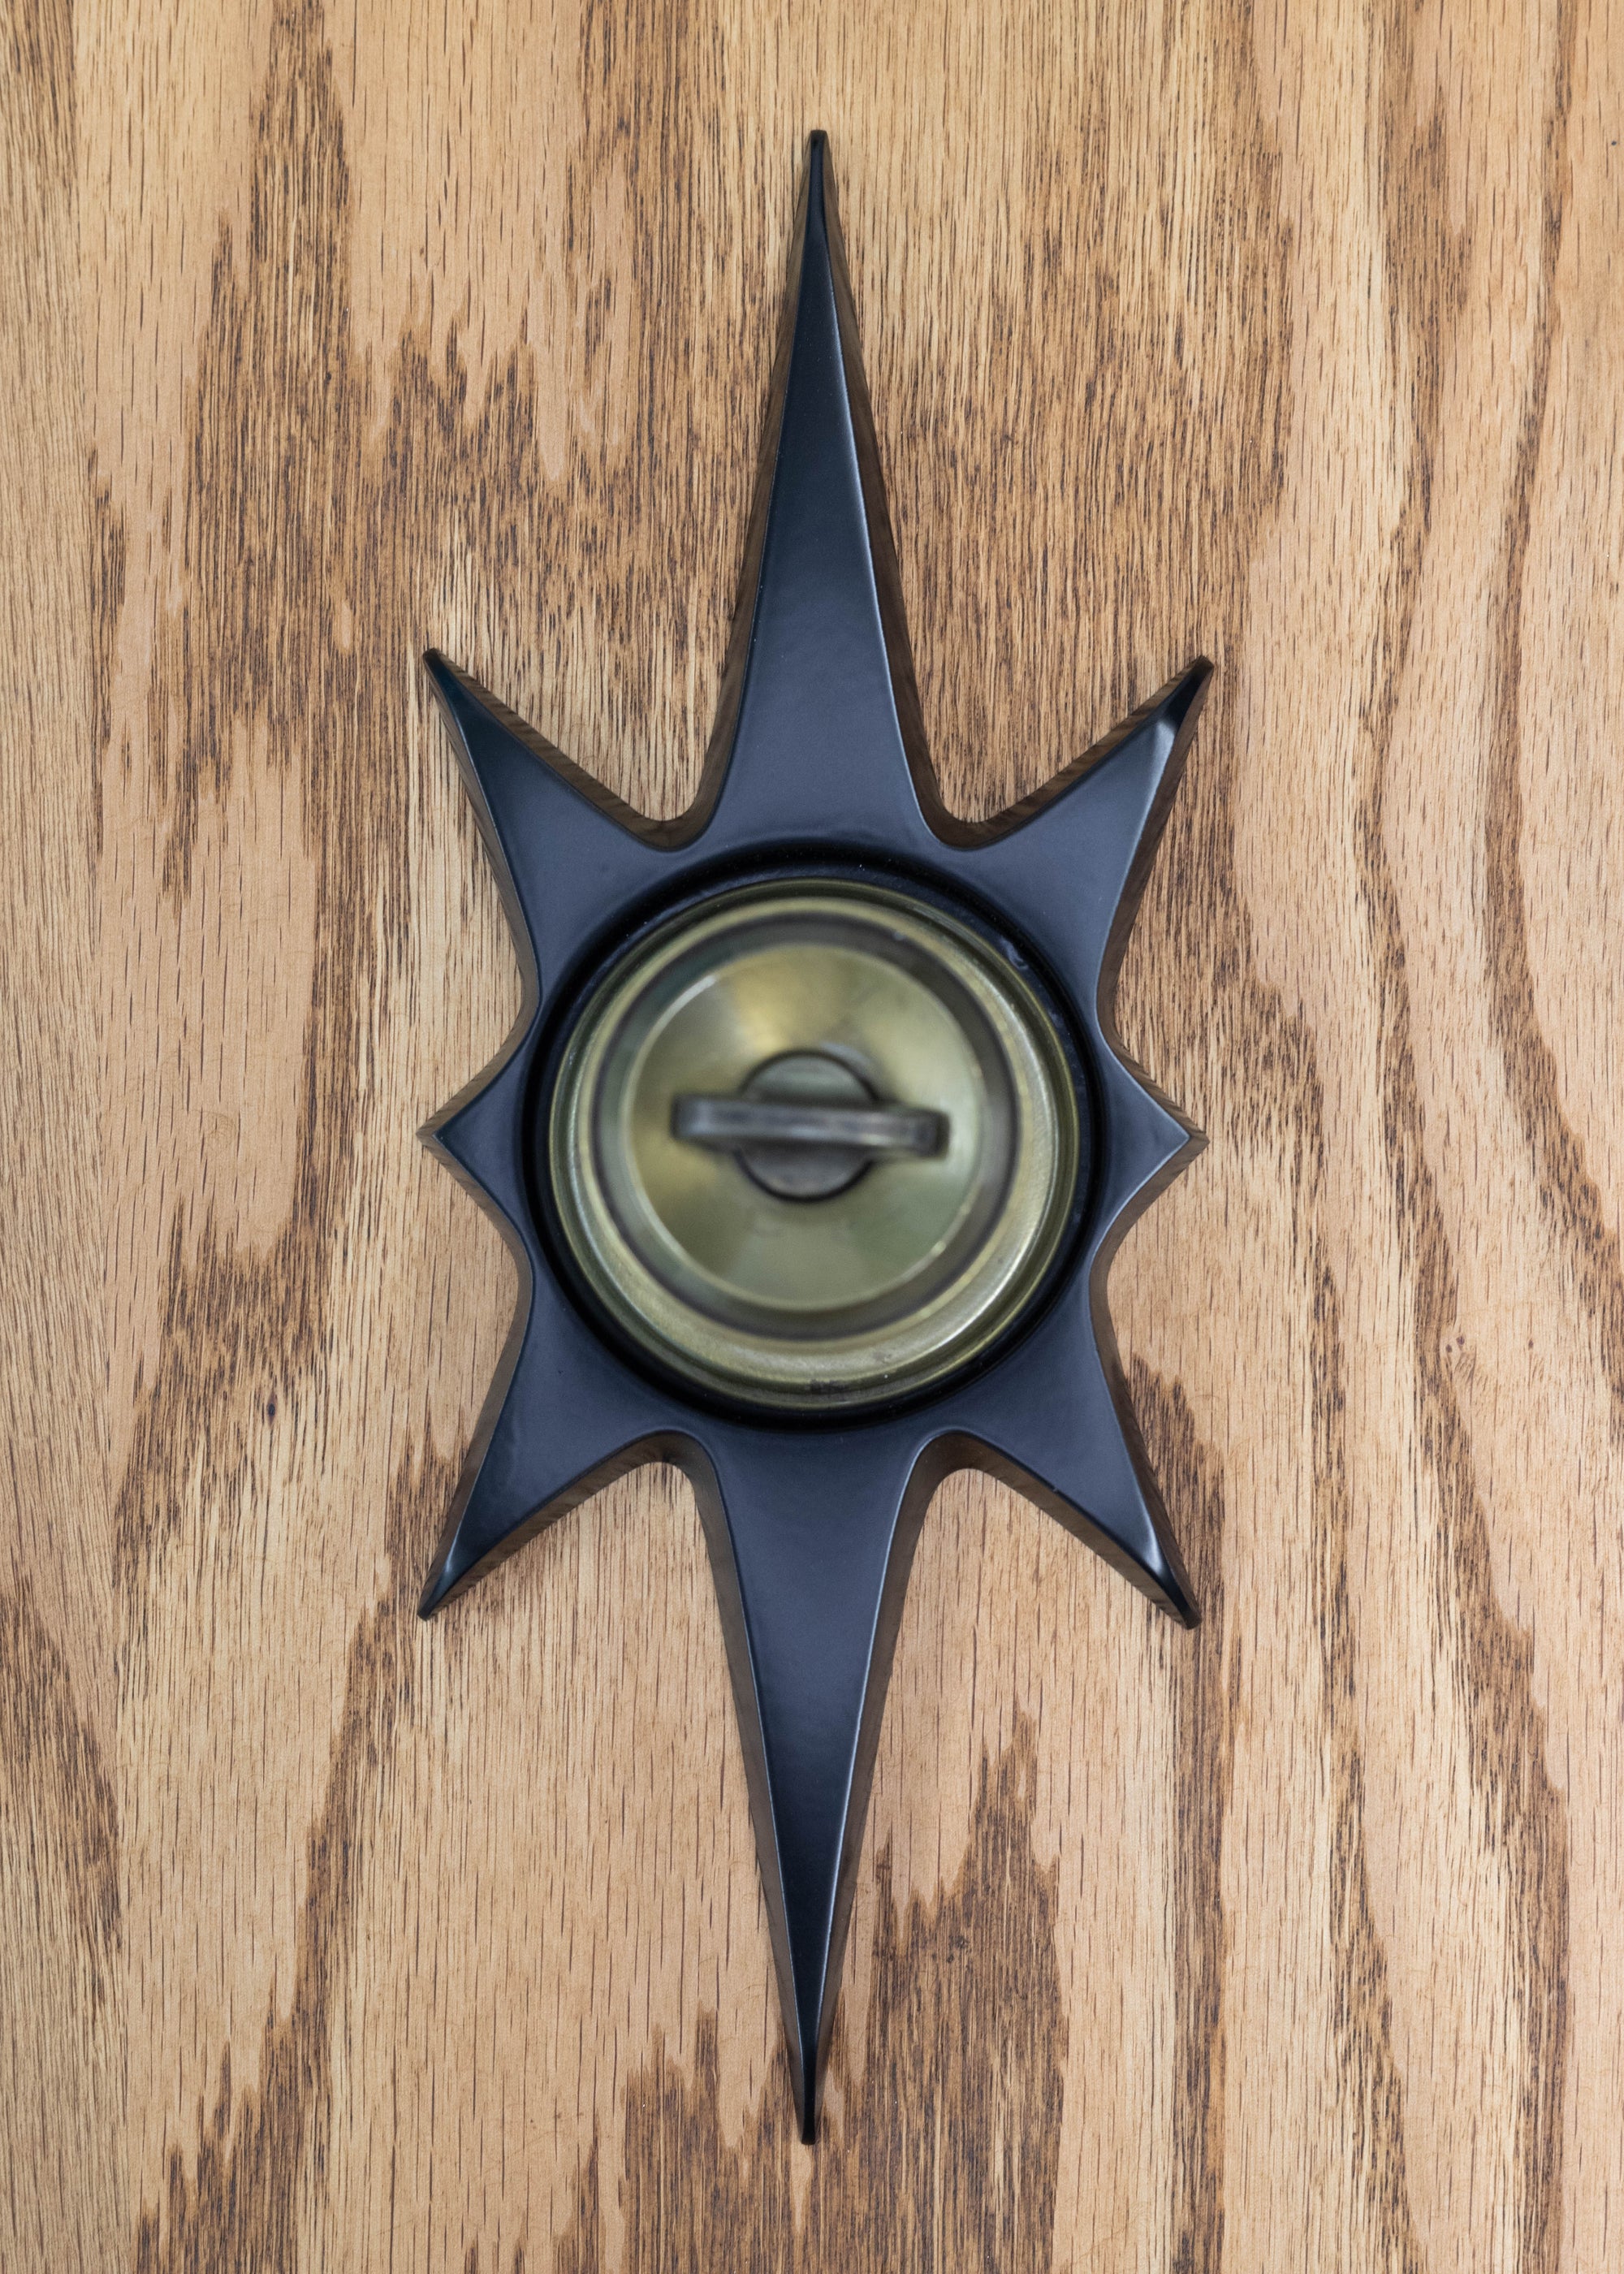 The matte black staburst escutcheon featuring a bronze doorknob.